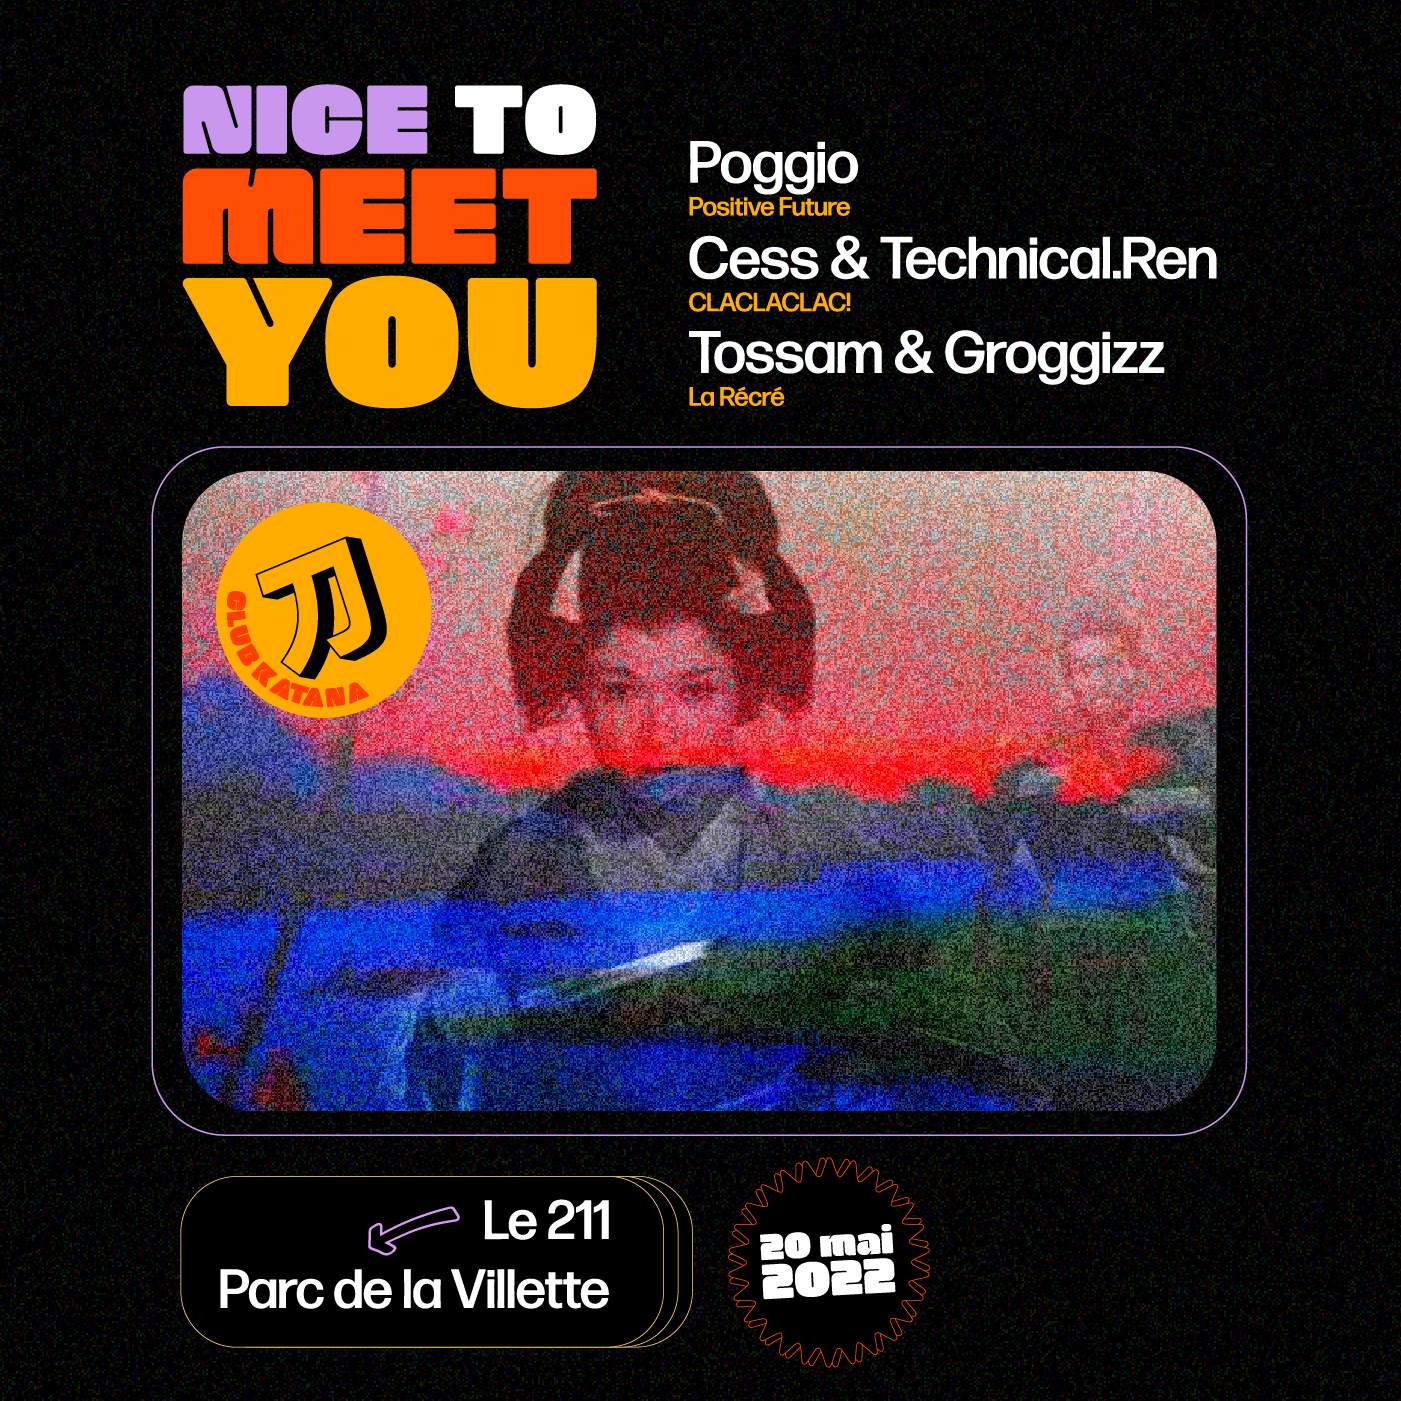 [CANCELLED] Nice to Meet You by Club Katana - Página trasera